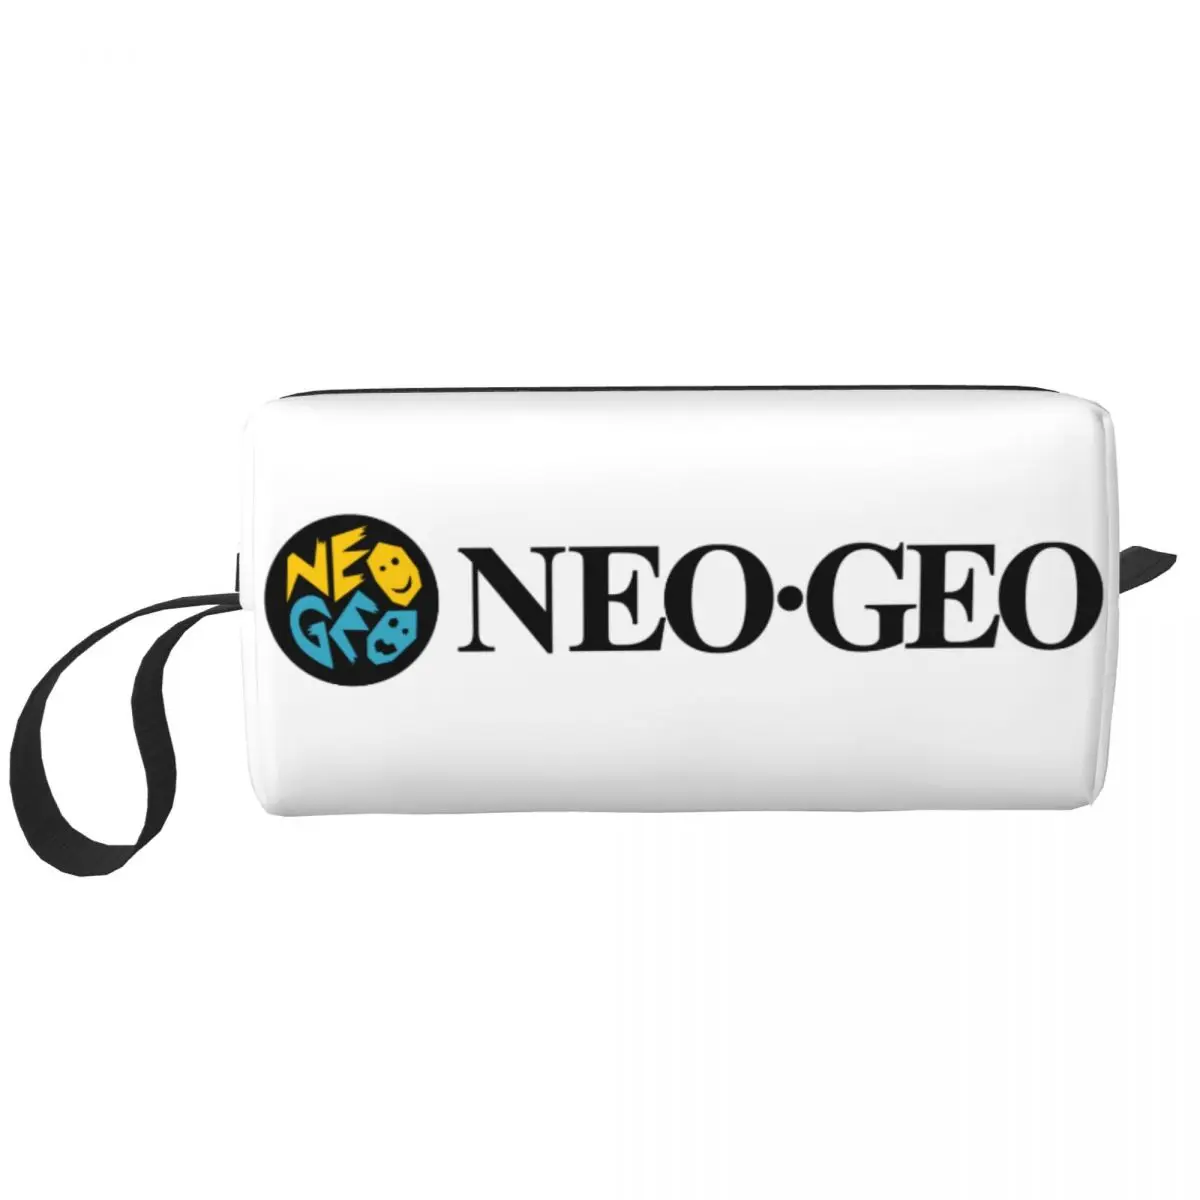 Neo Geo Logo Косметичка Сумка Женщины Путешествия Косметика Органайзер Симпатичный Neogeo Arcade Хранение Туалетные принадлежности Сумки Dopp Kit Чехол Коробка 0